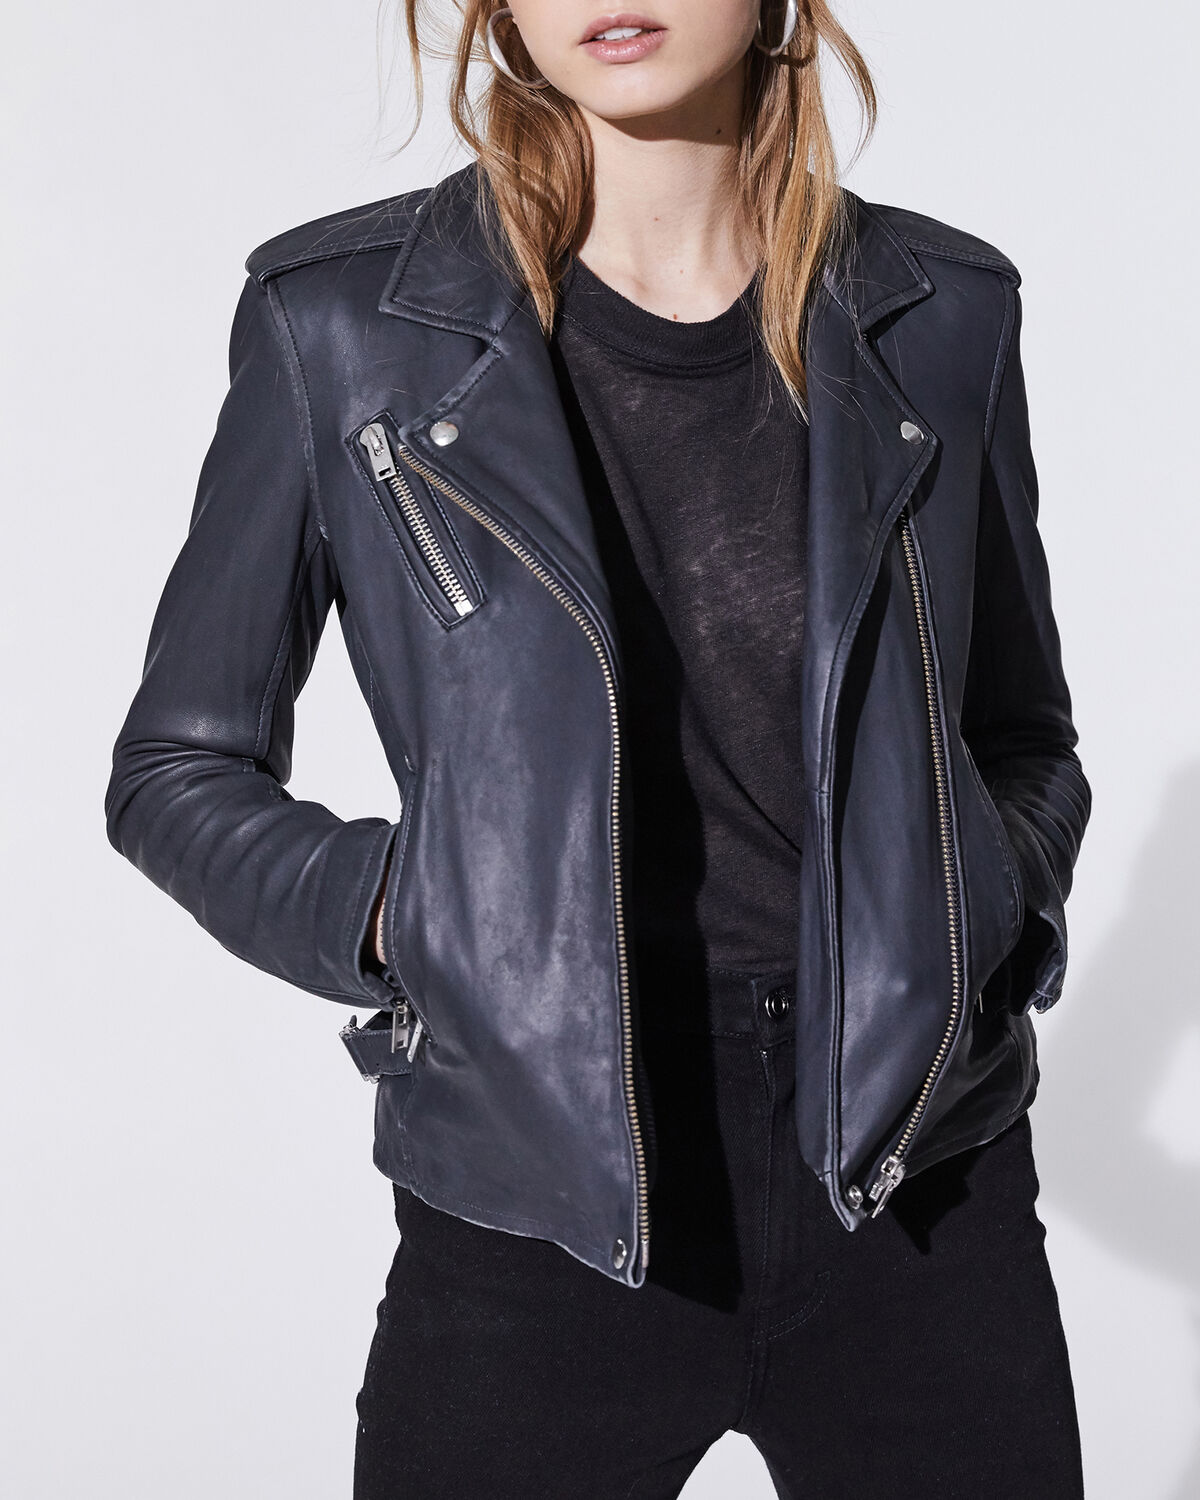 Newhan Leather Jacket Slate Grey by IRO Paris | Coshio Online Shop